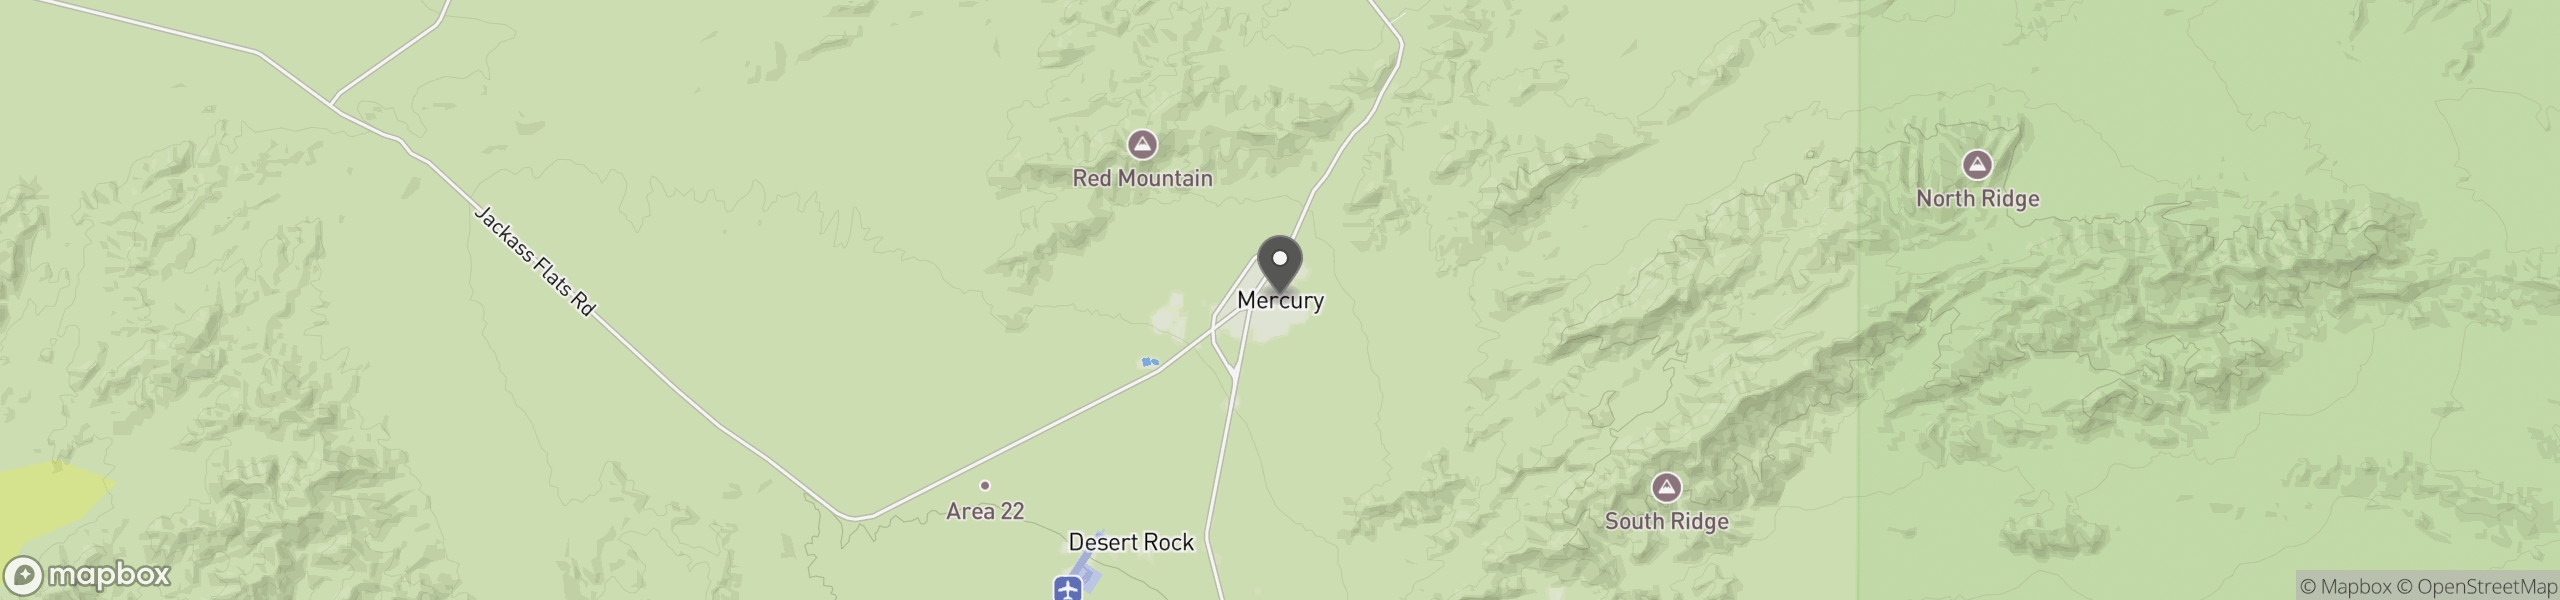 Mercury, NV